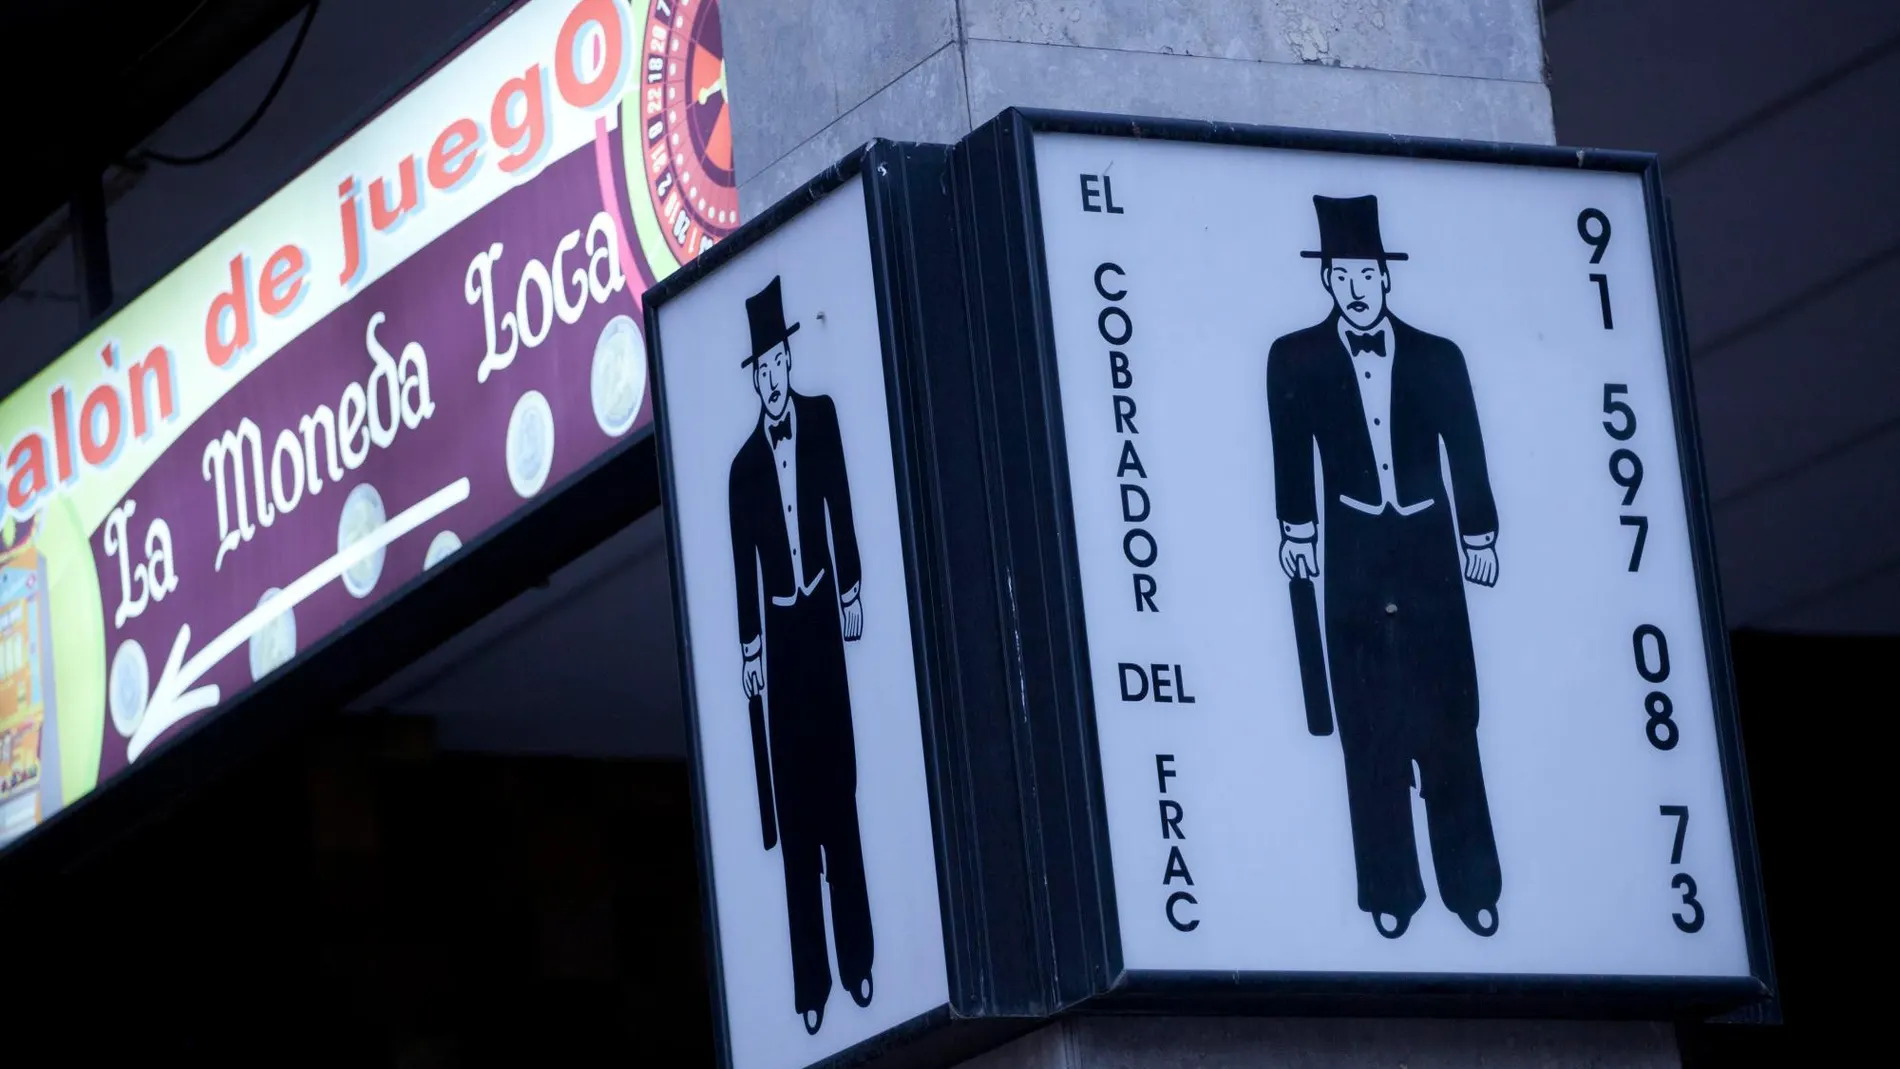 La famosa empresa de cobro de morososo “El cobrador del frac, en la calle Orense de Madrid